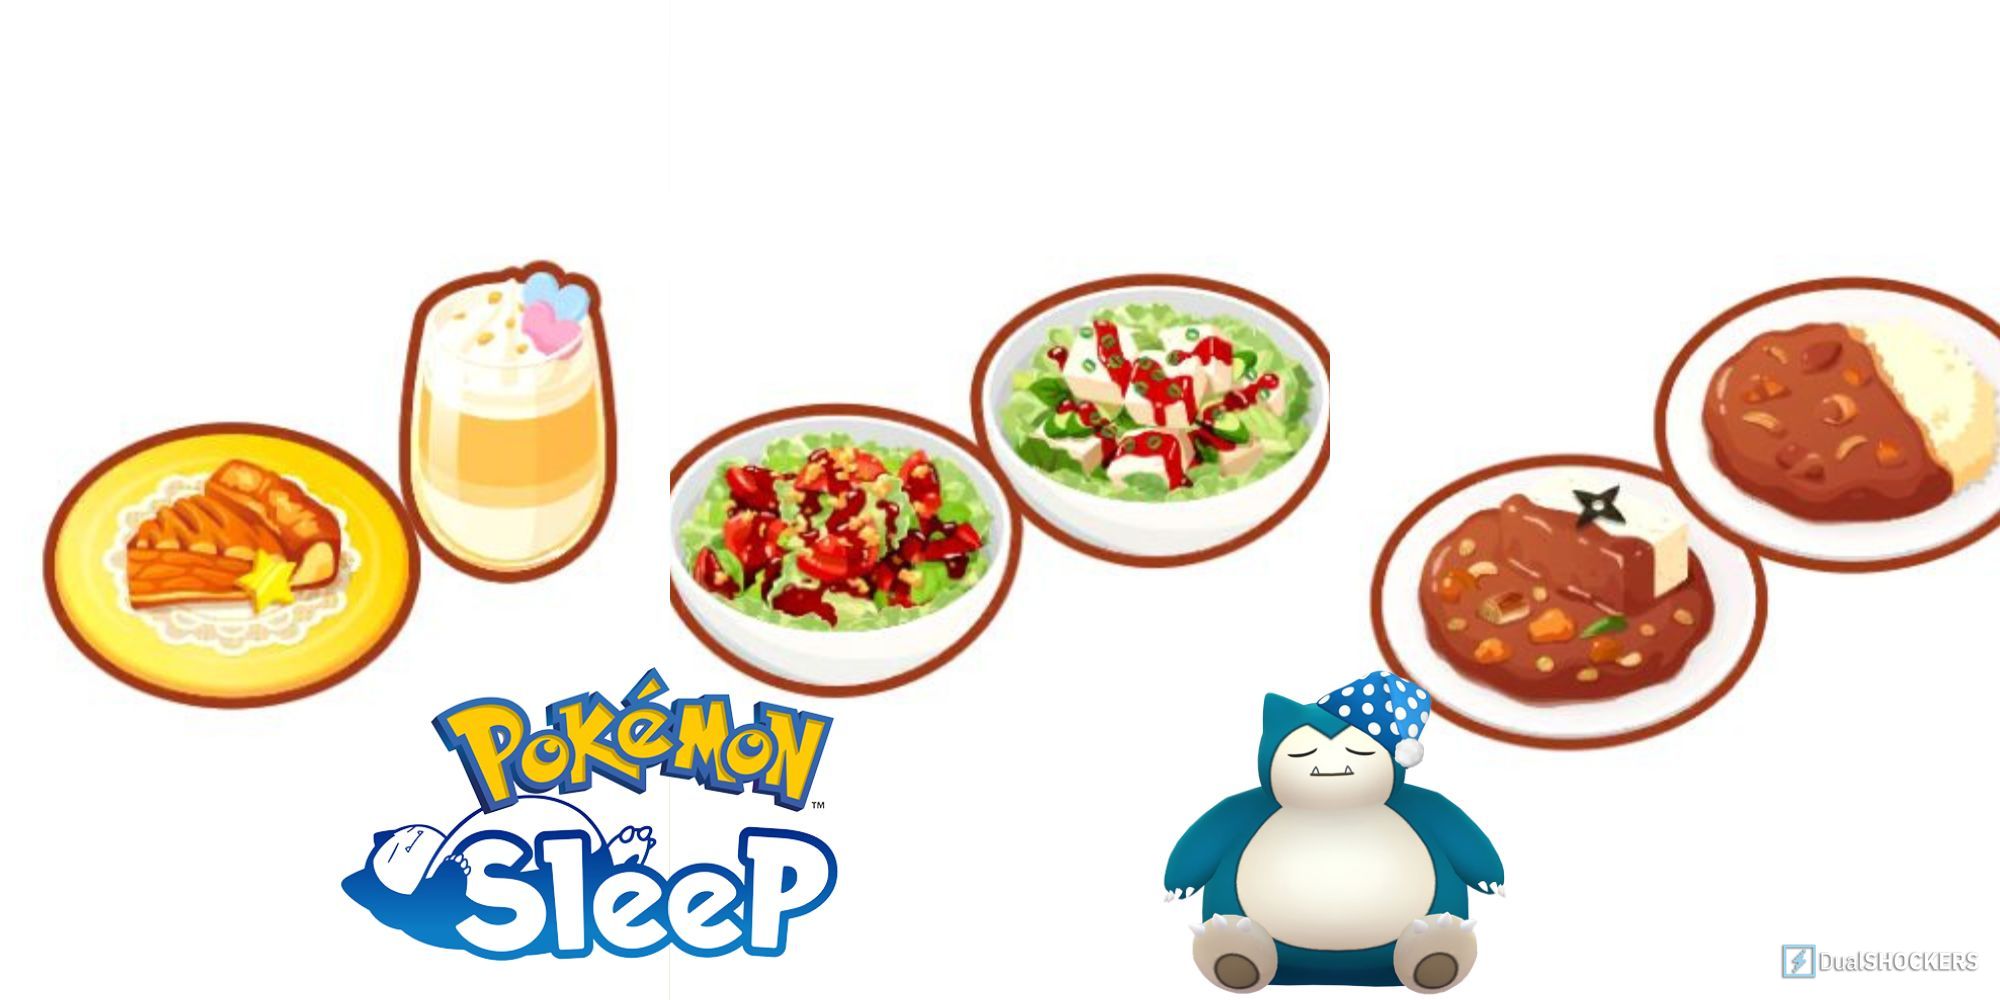 Pokemon Sleep - Meals